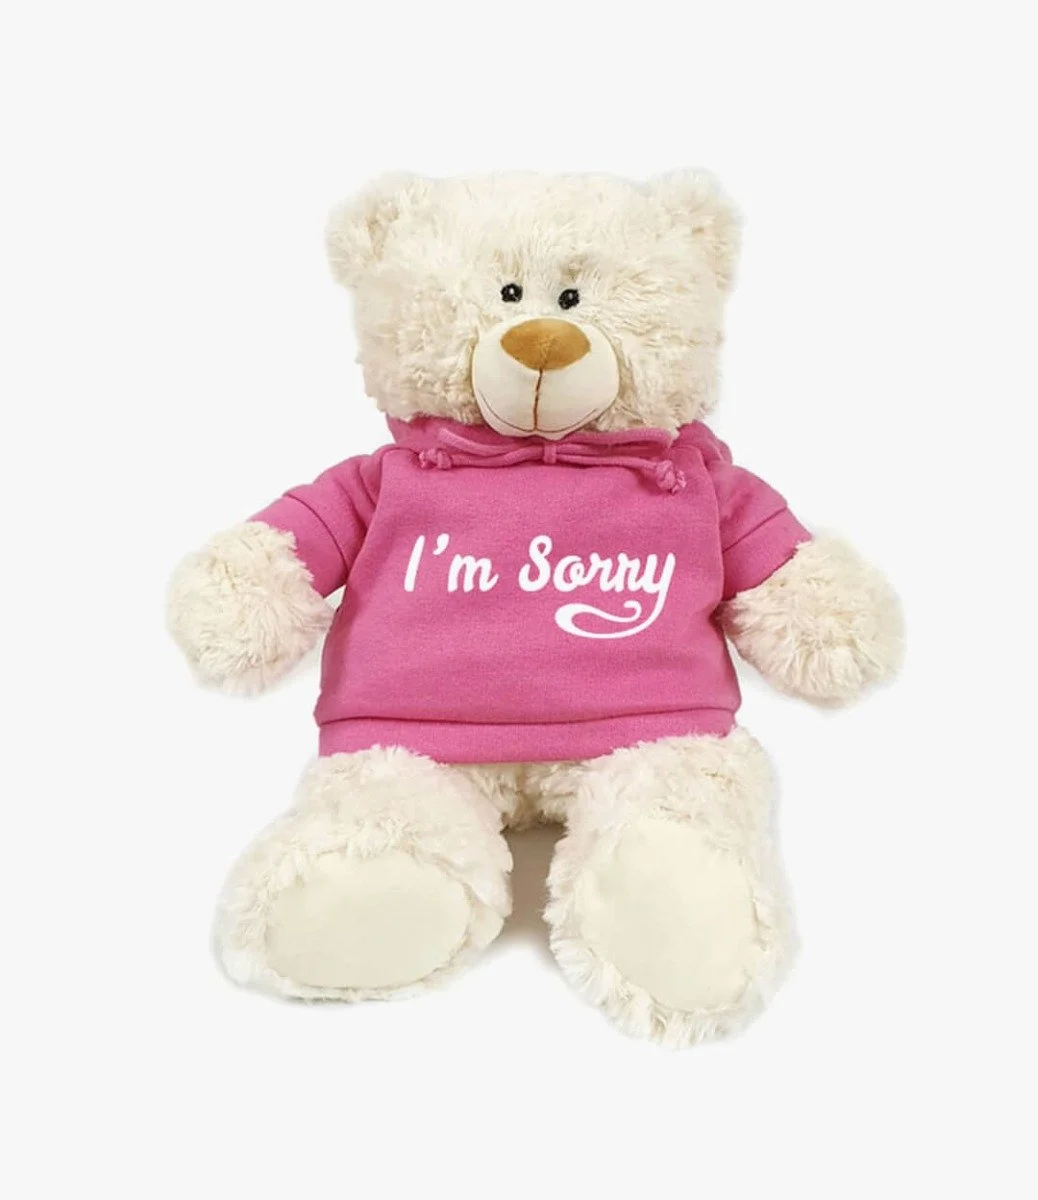 Teddy Bear in Pink Hoodie "I'm Sorry" by Fay Lawson